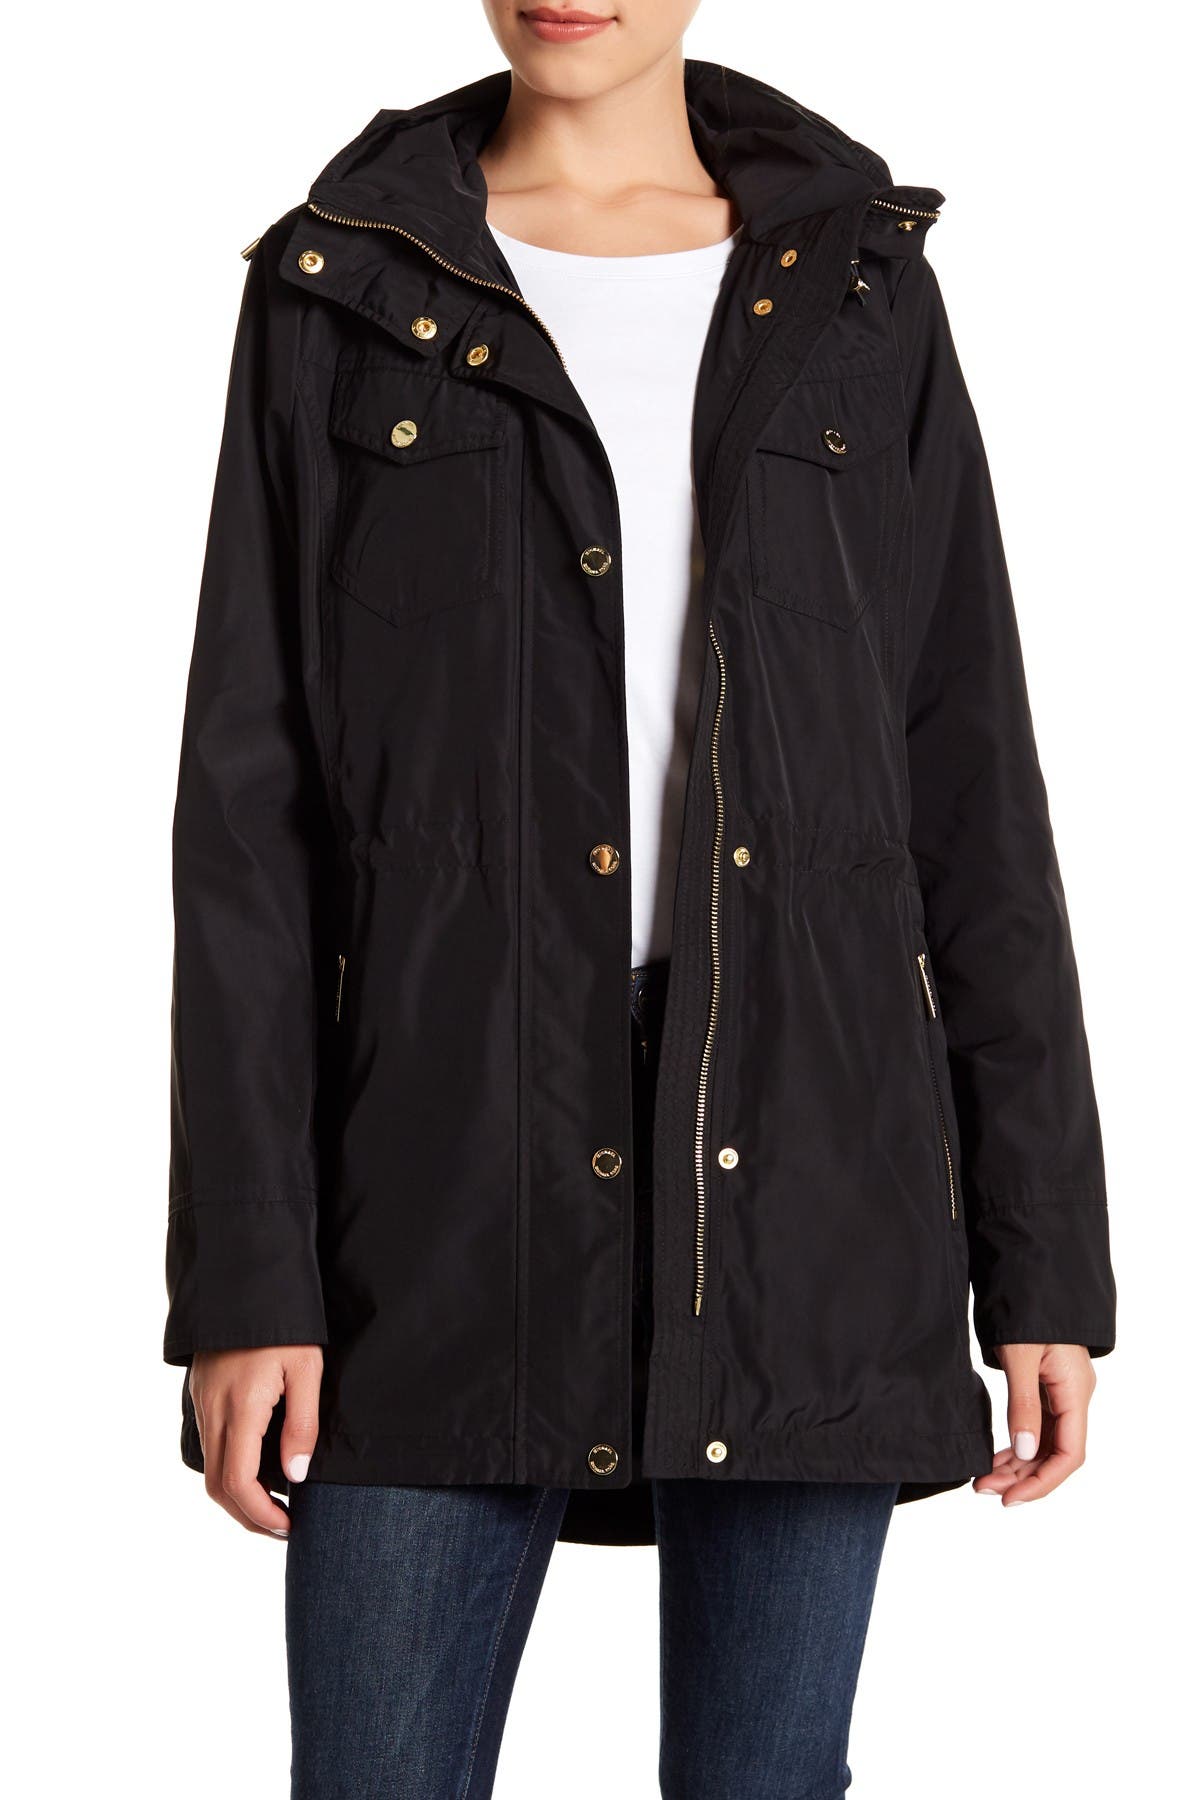 michael kors black rain jacket